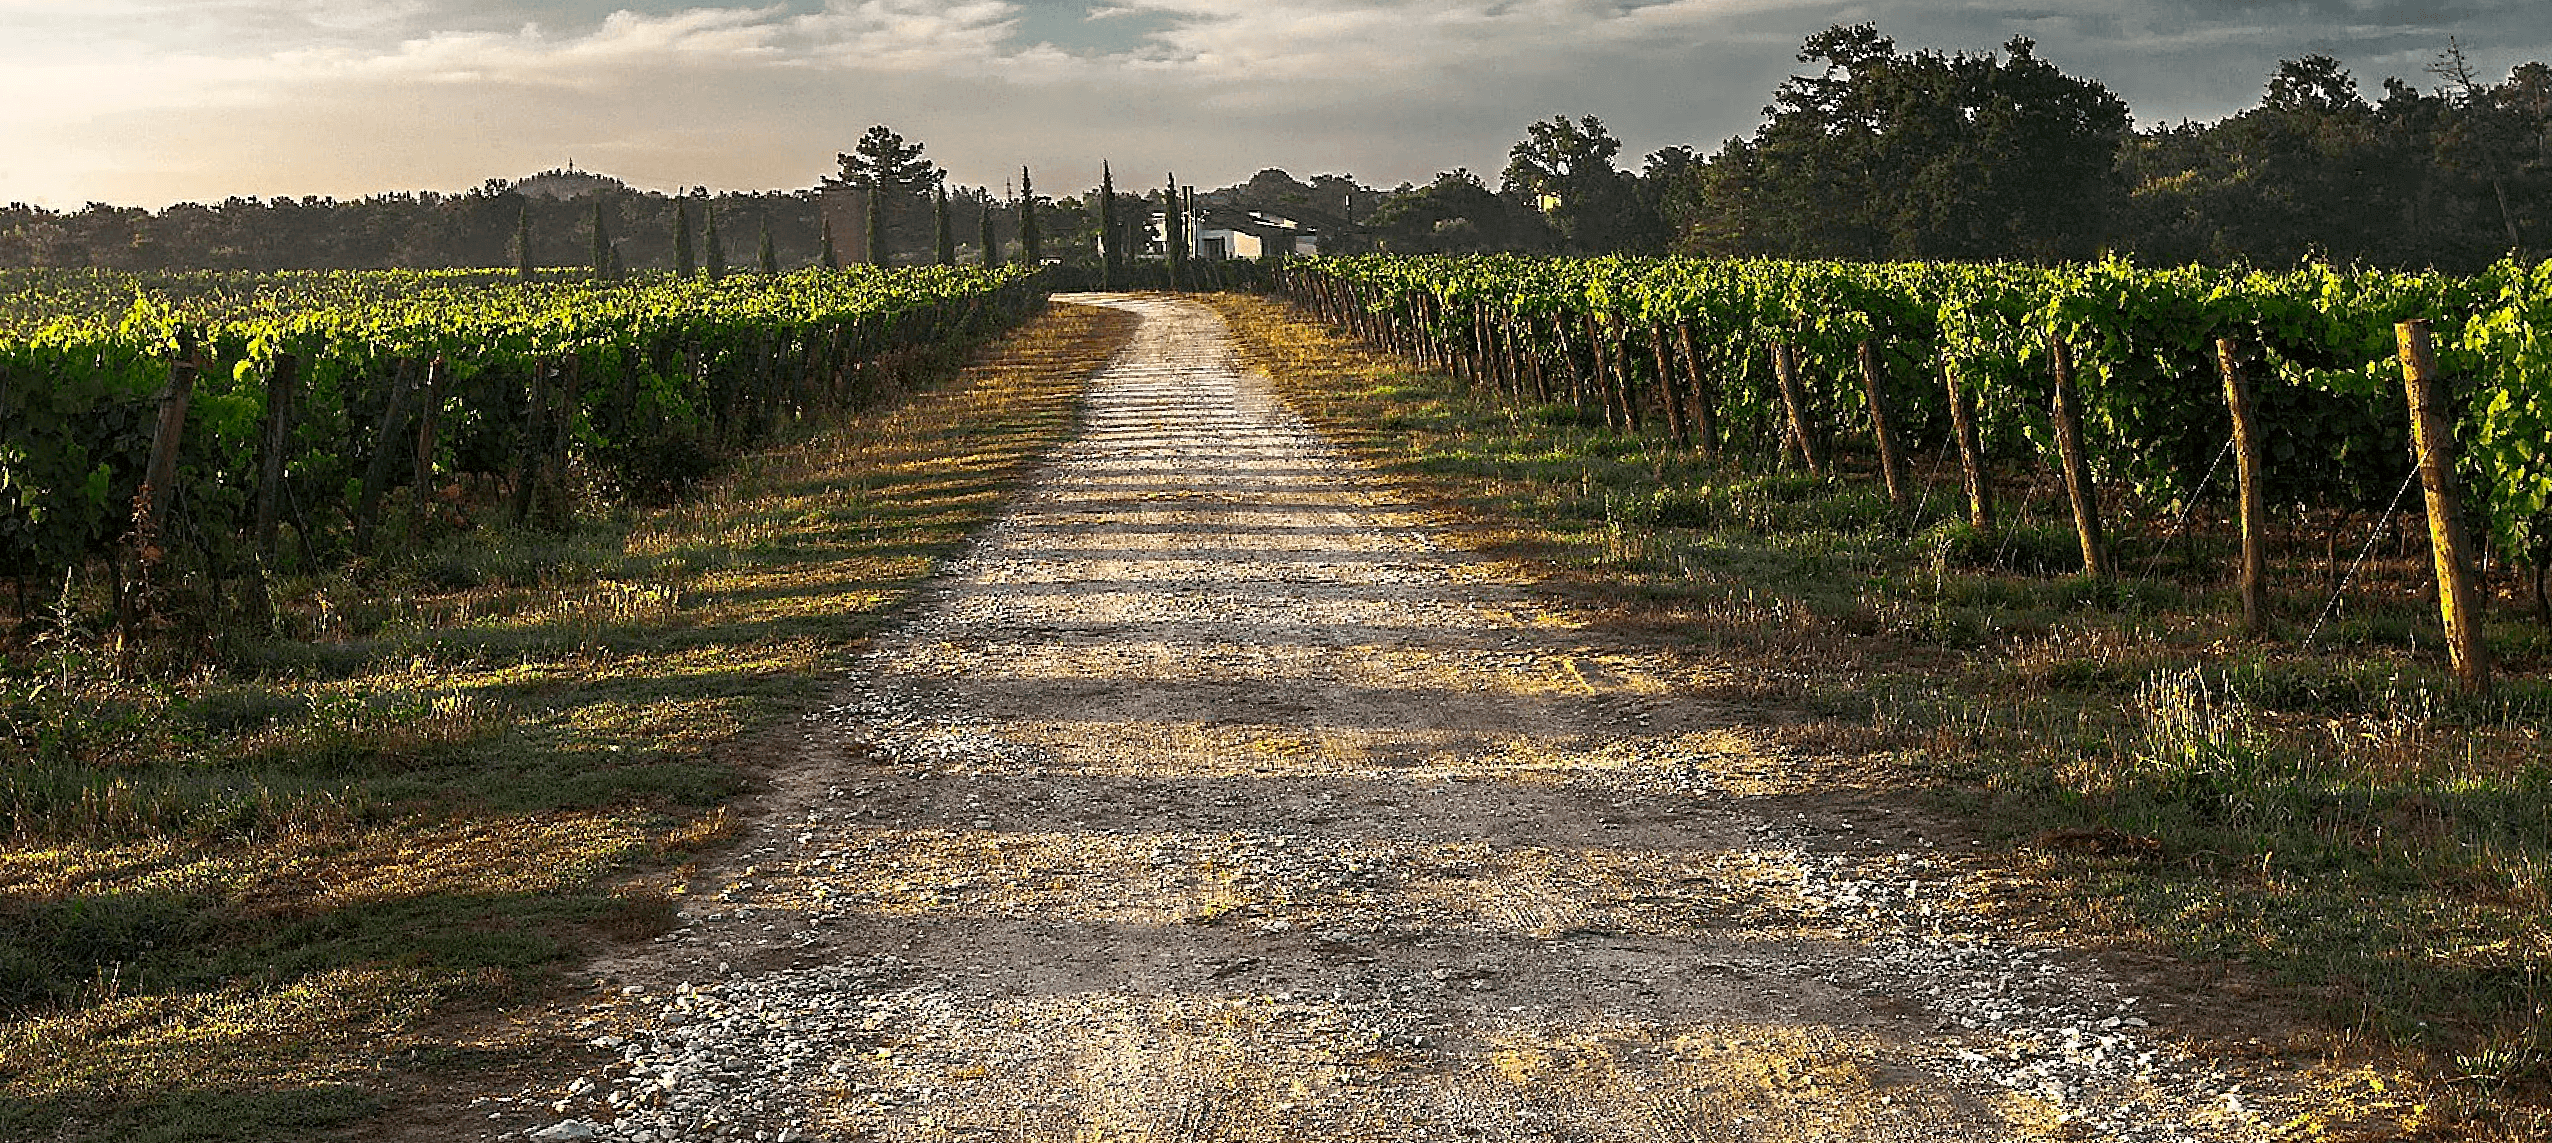 Dirt Road Through Winery